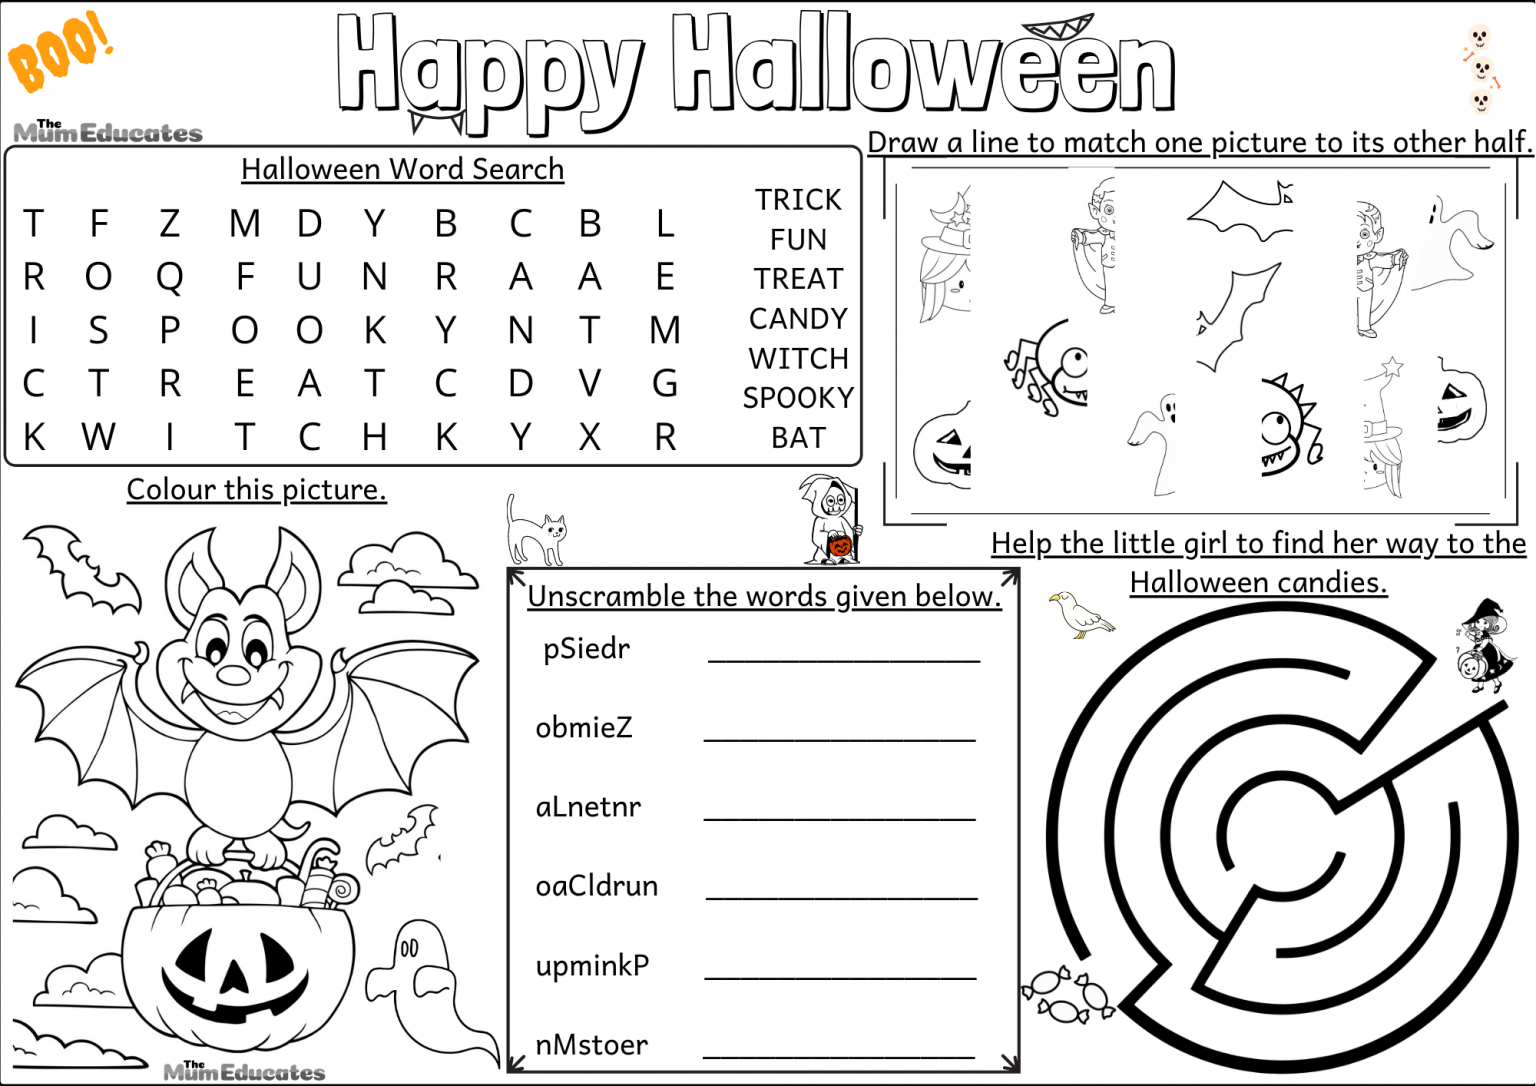 free-halloween-activity-mat-for-kids-printable-the-mum-educates